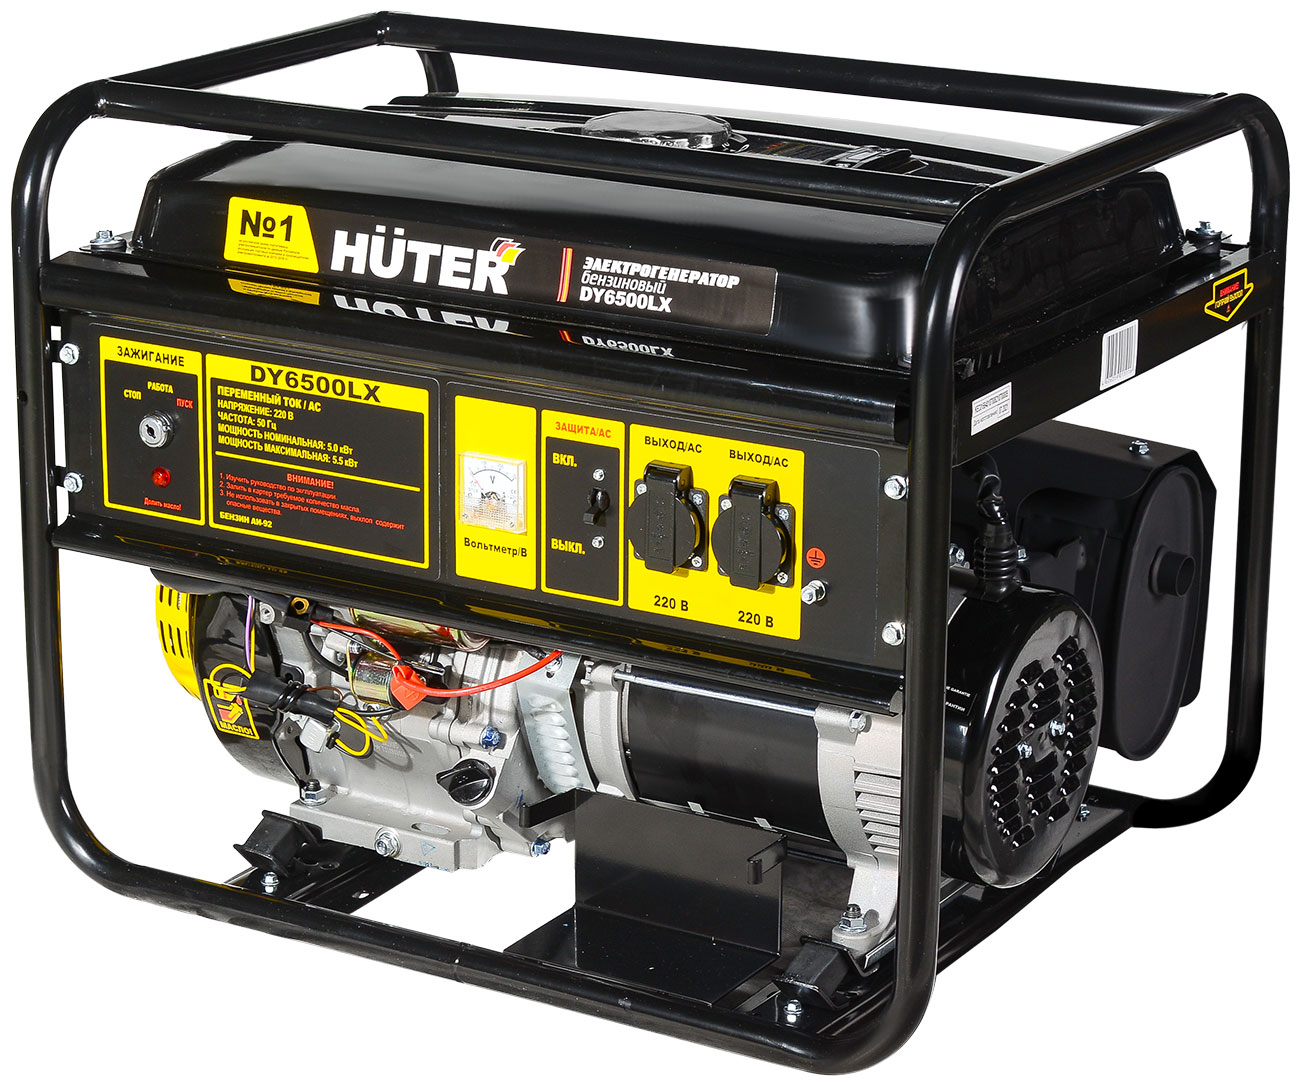 электрогенератор huter dy6500lx электростартер 5 5 5 квт 22 л 220 в Электрический генератор и электростанция Huter DY6500LX- электростартер